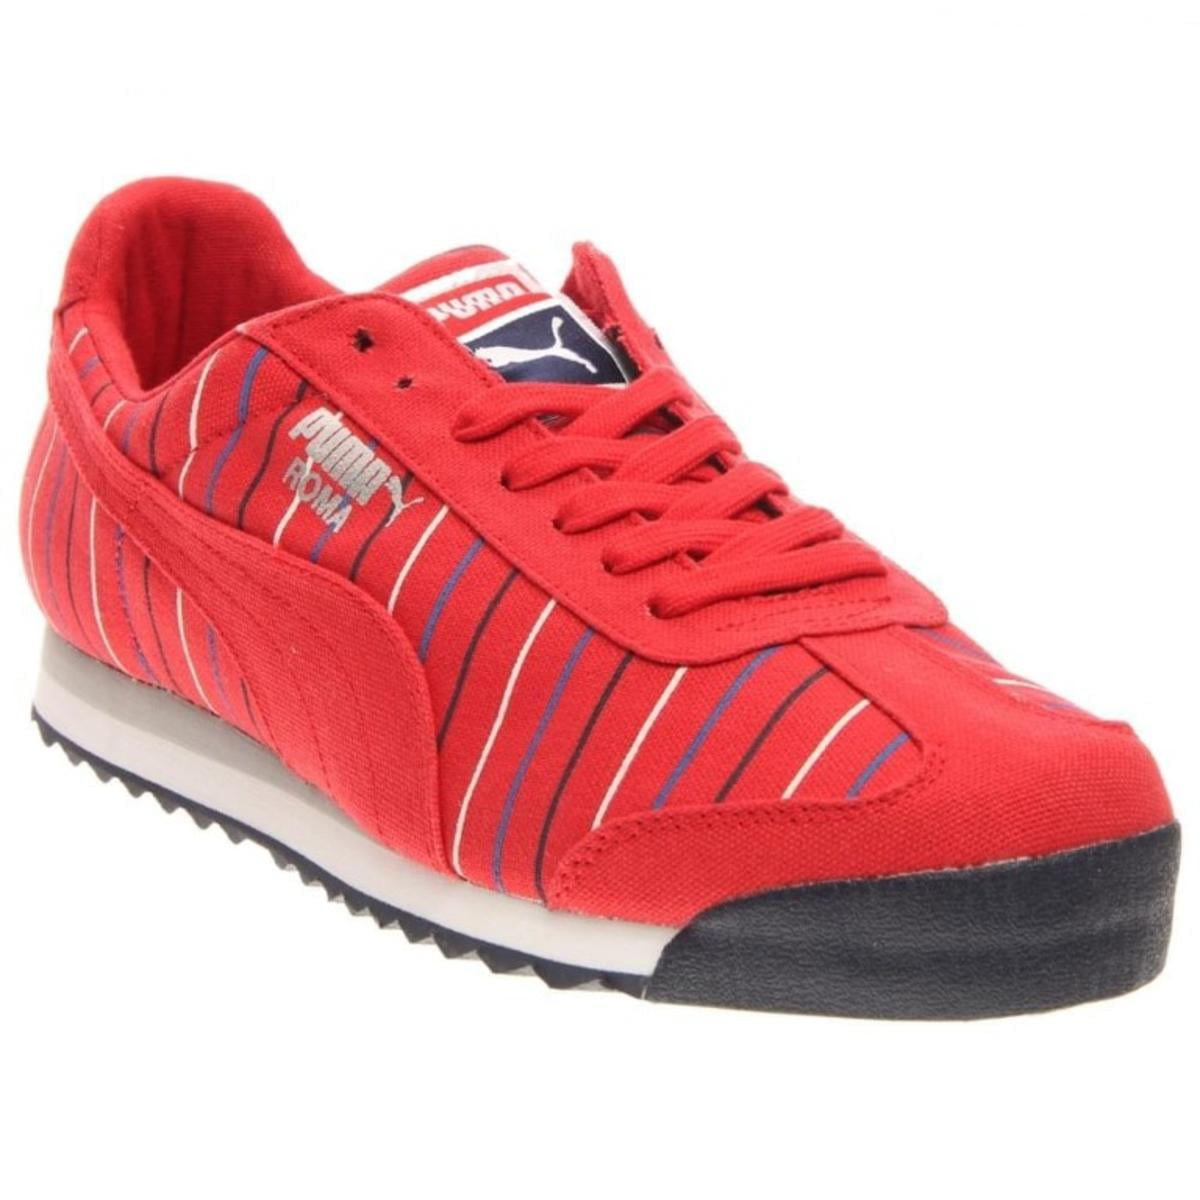 Mens Red/white/Blue Sneakers - Walmart.com